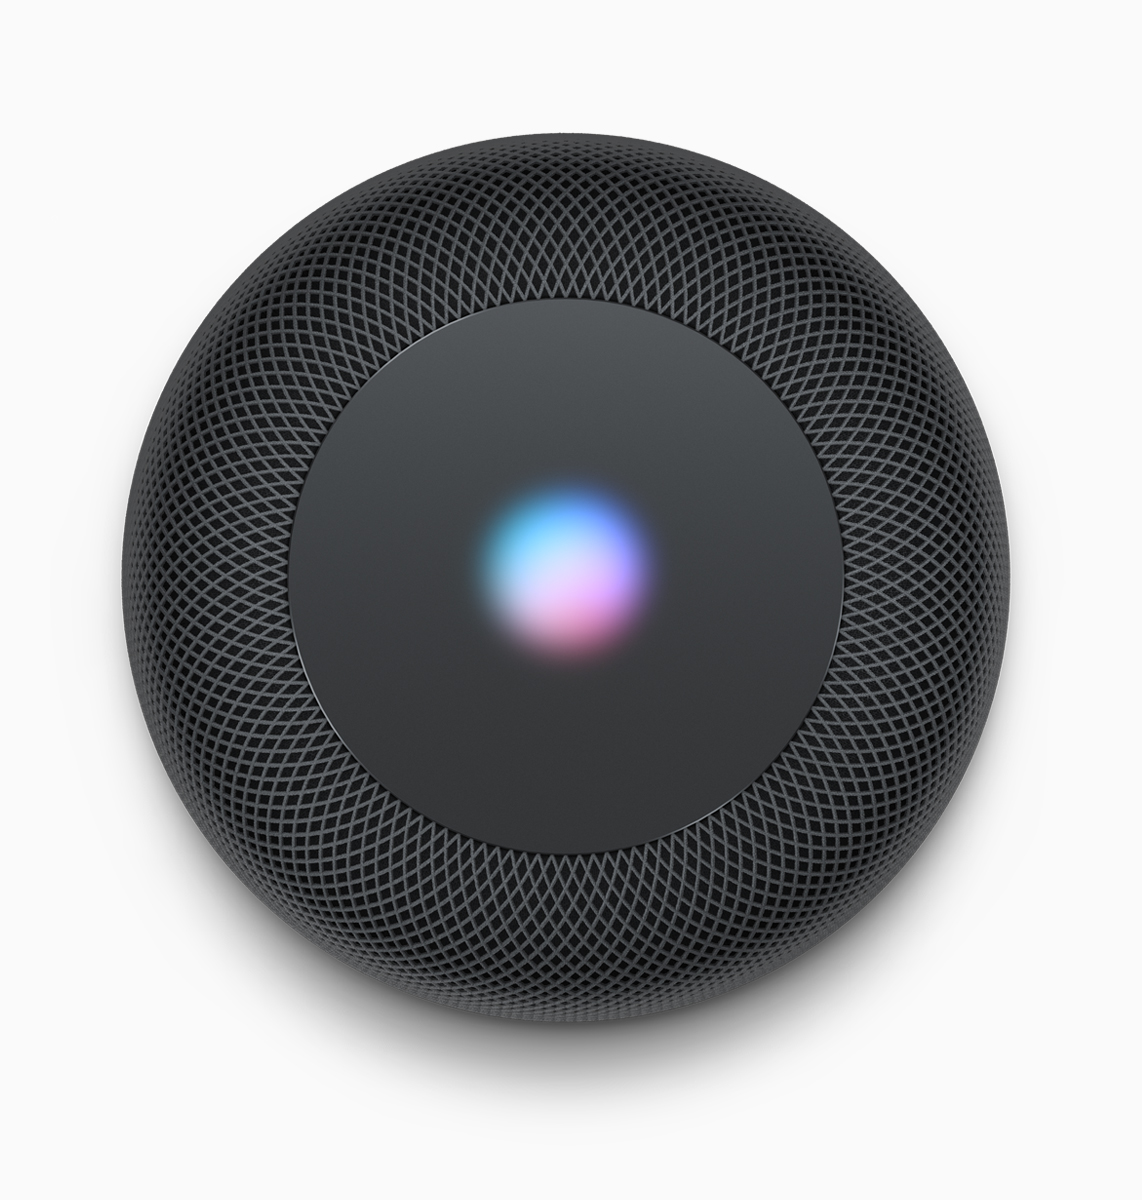 Apple Unveils HomePod Wireless Speaker With Siri